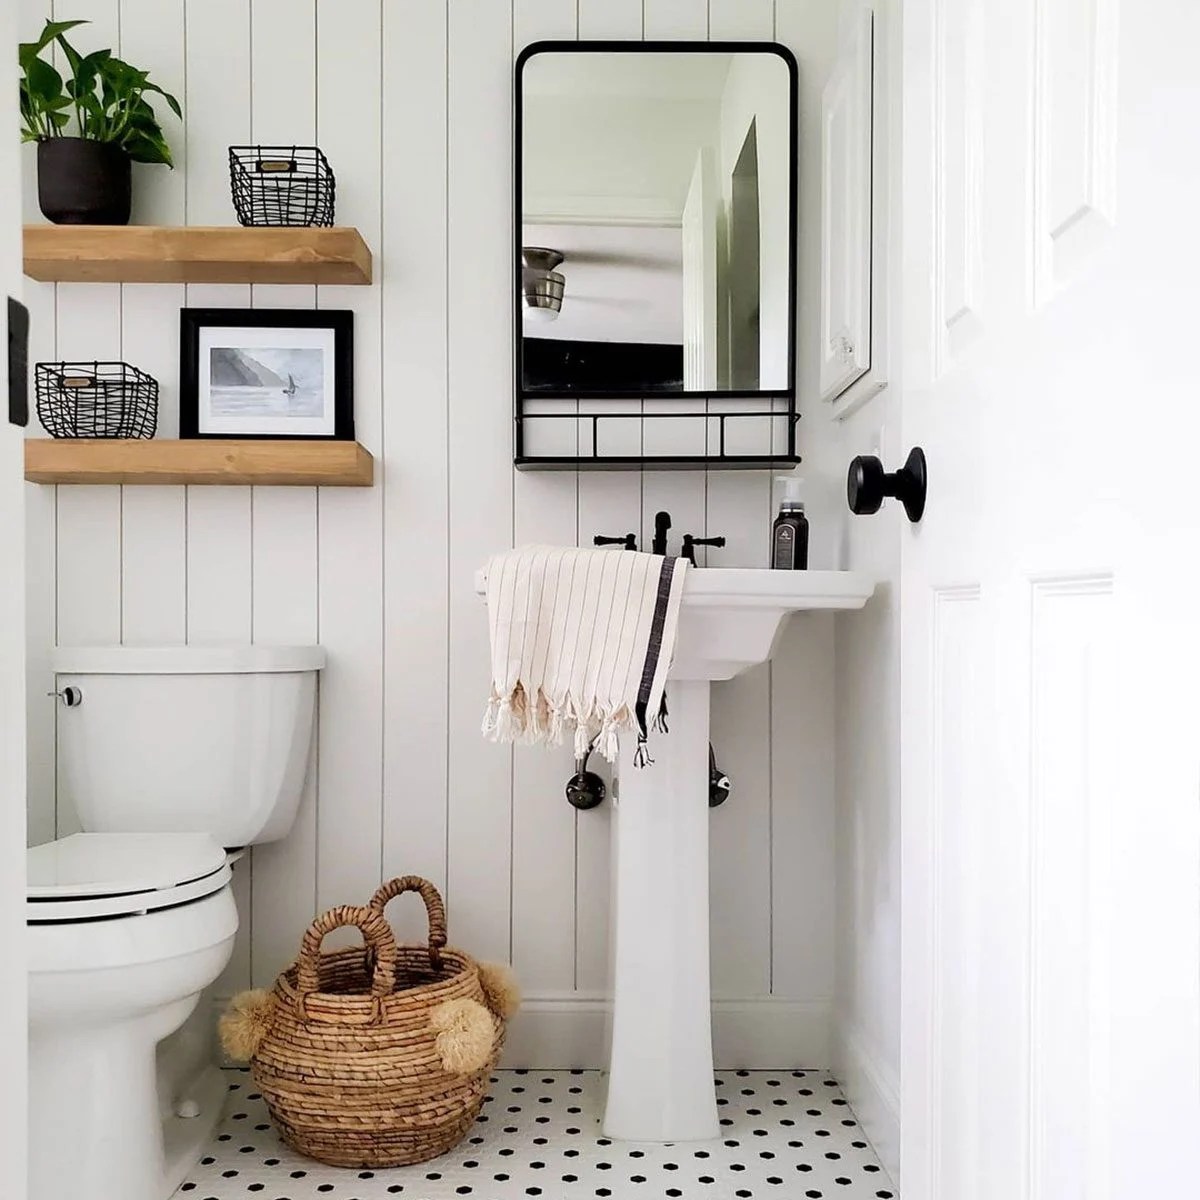 10 Small Bathroom Decorating Ideas Family Handyman